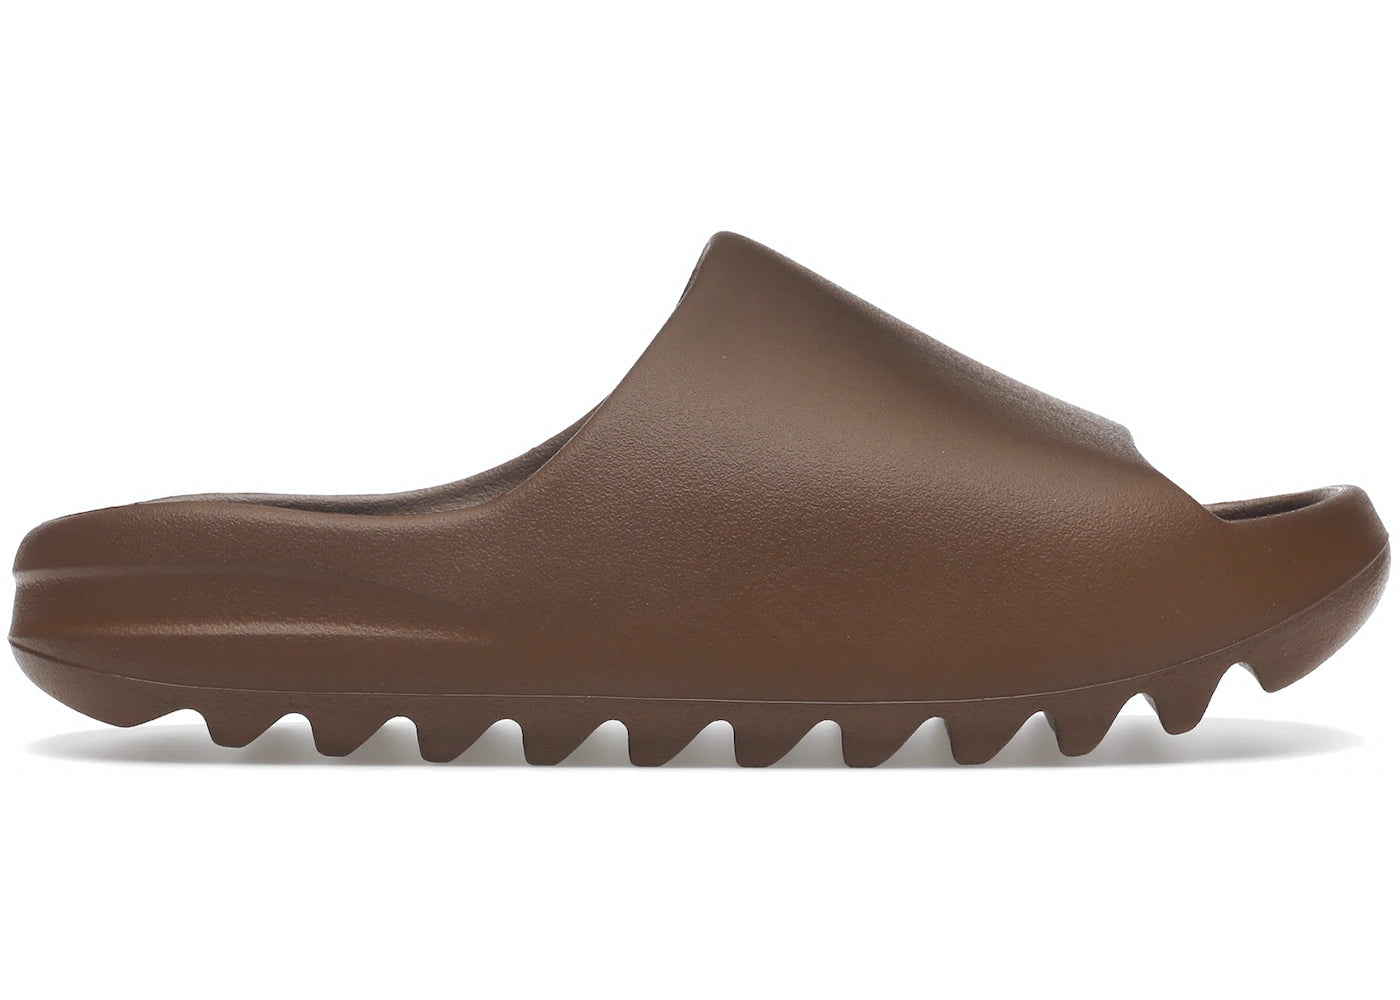 adidas Yeezy Slide Flax - Used